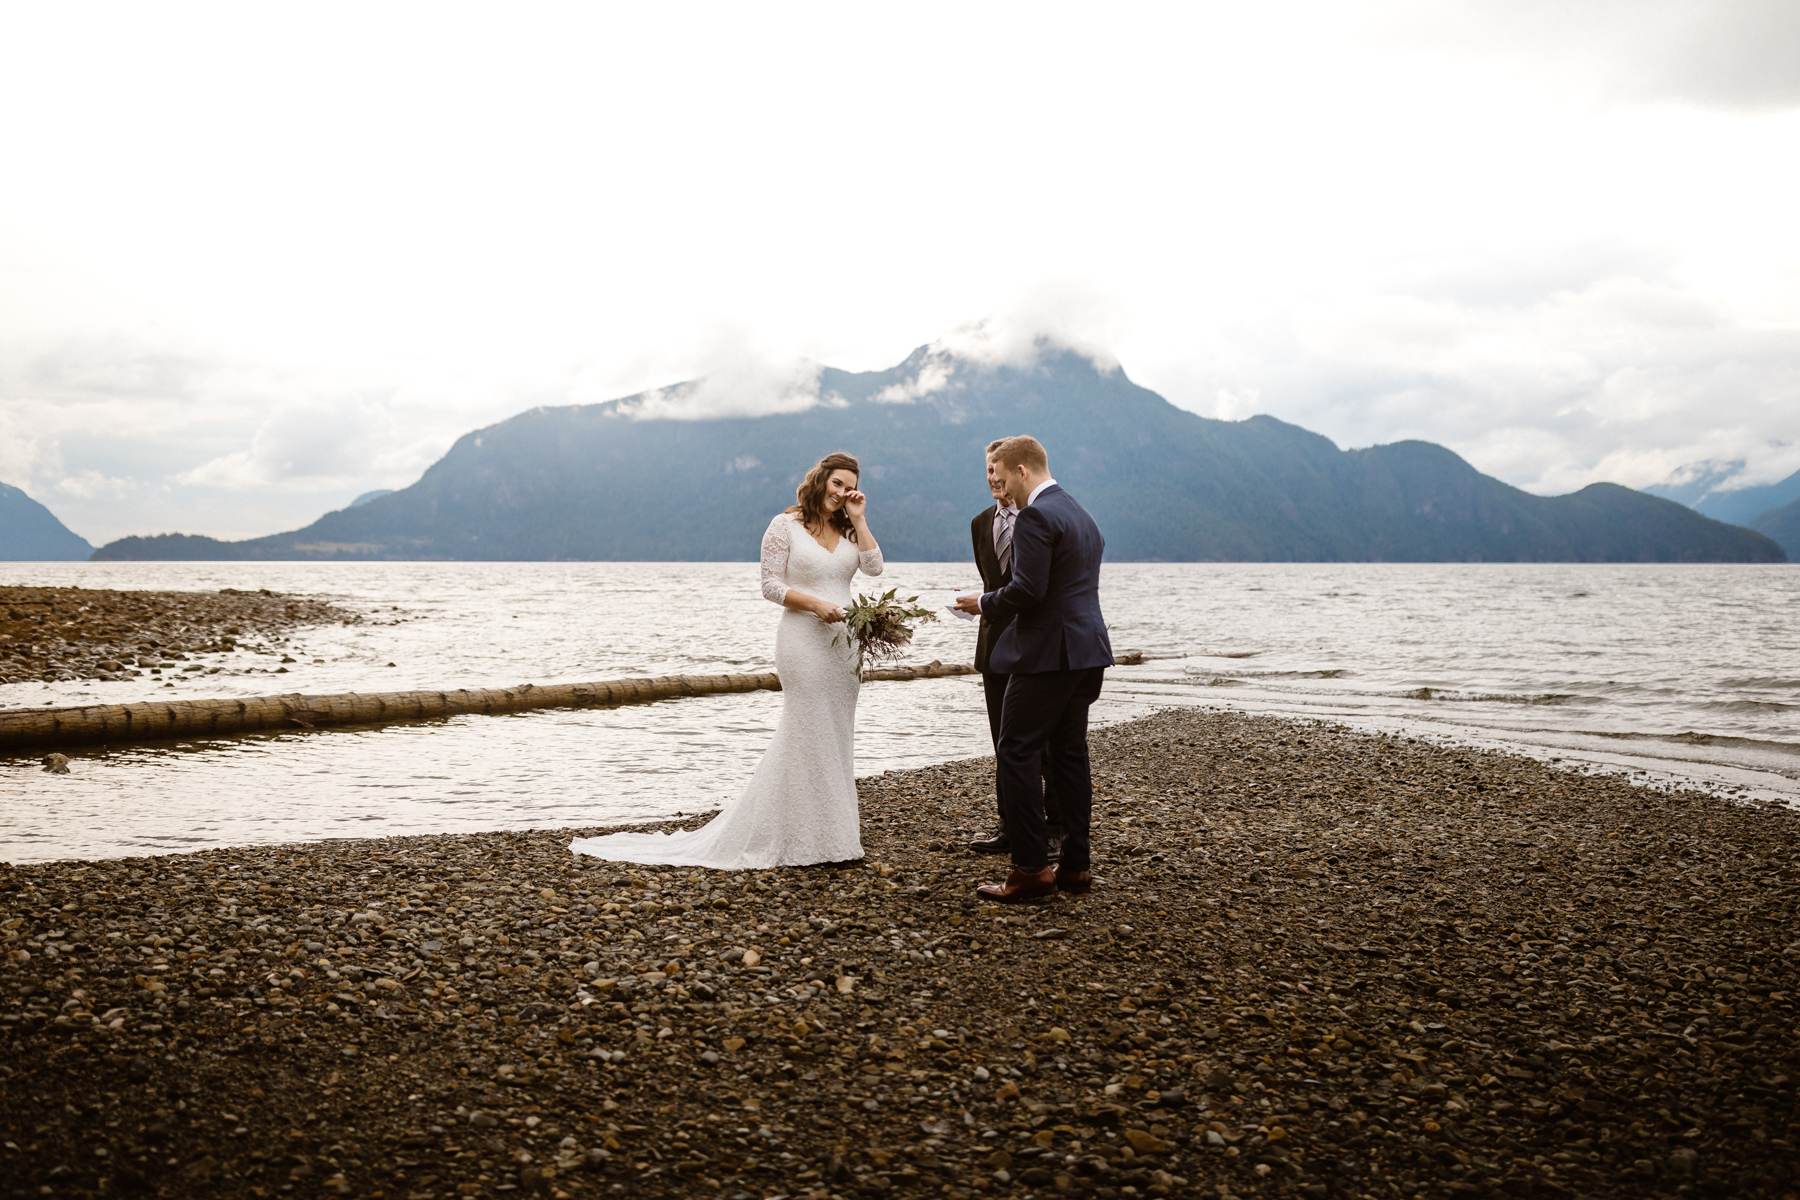 Squamish Wedding Photographers at an Adventurous Elopement - Image 12